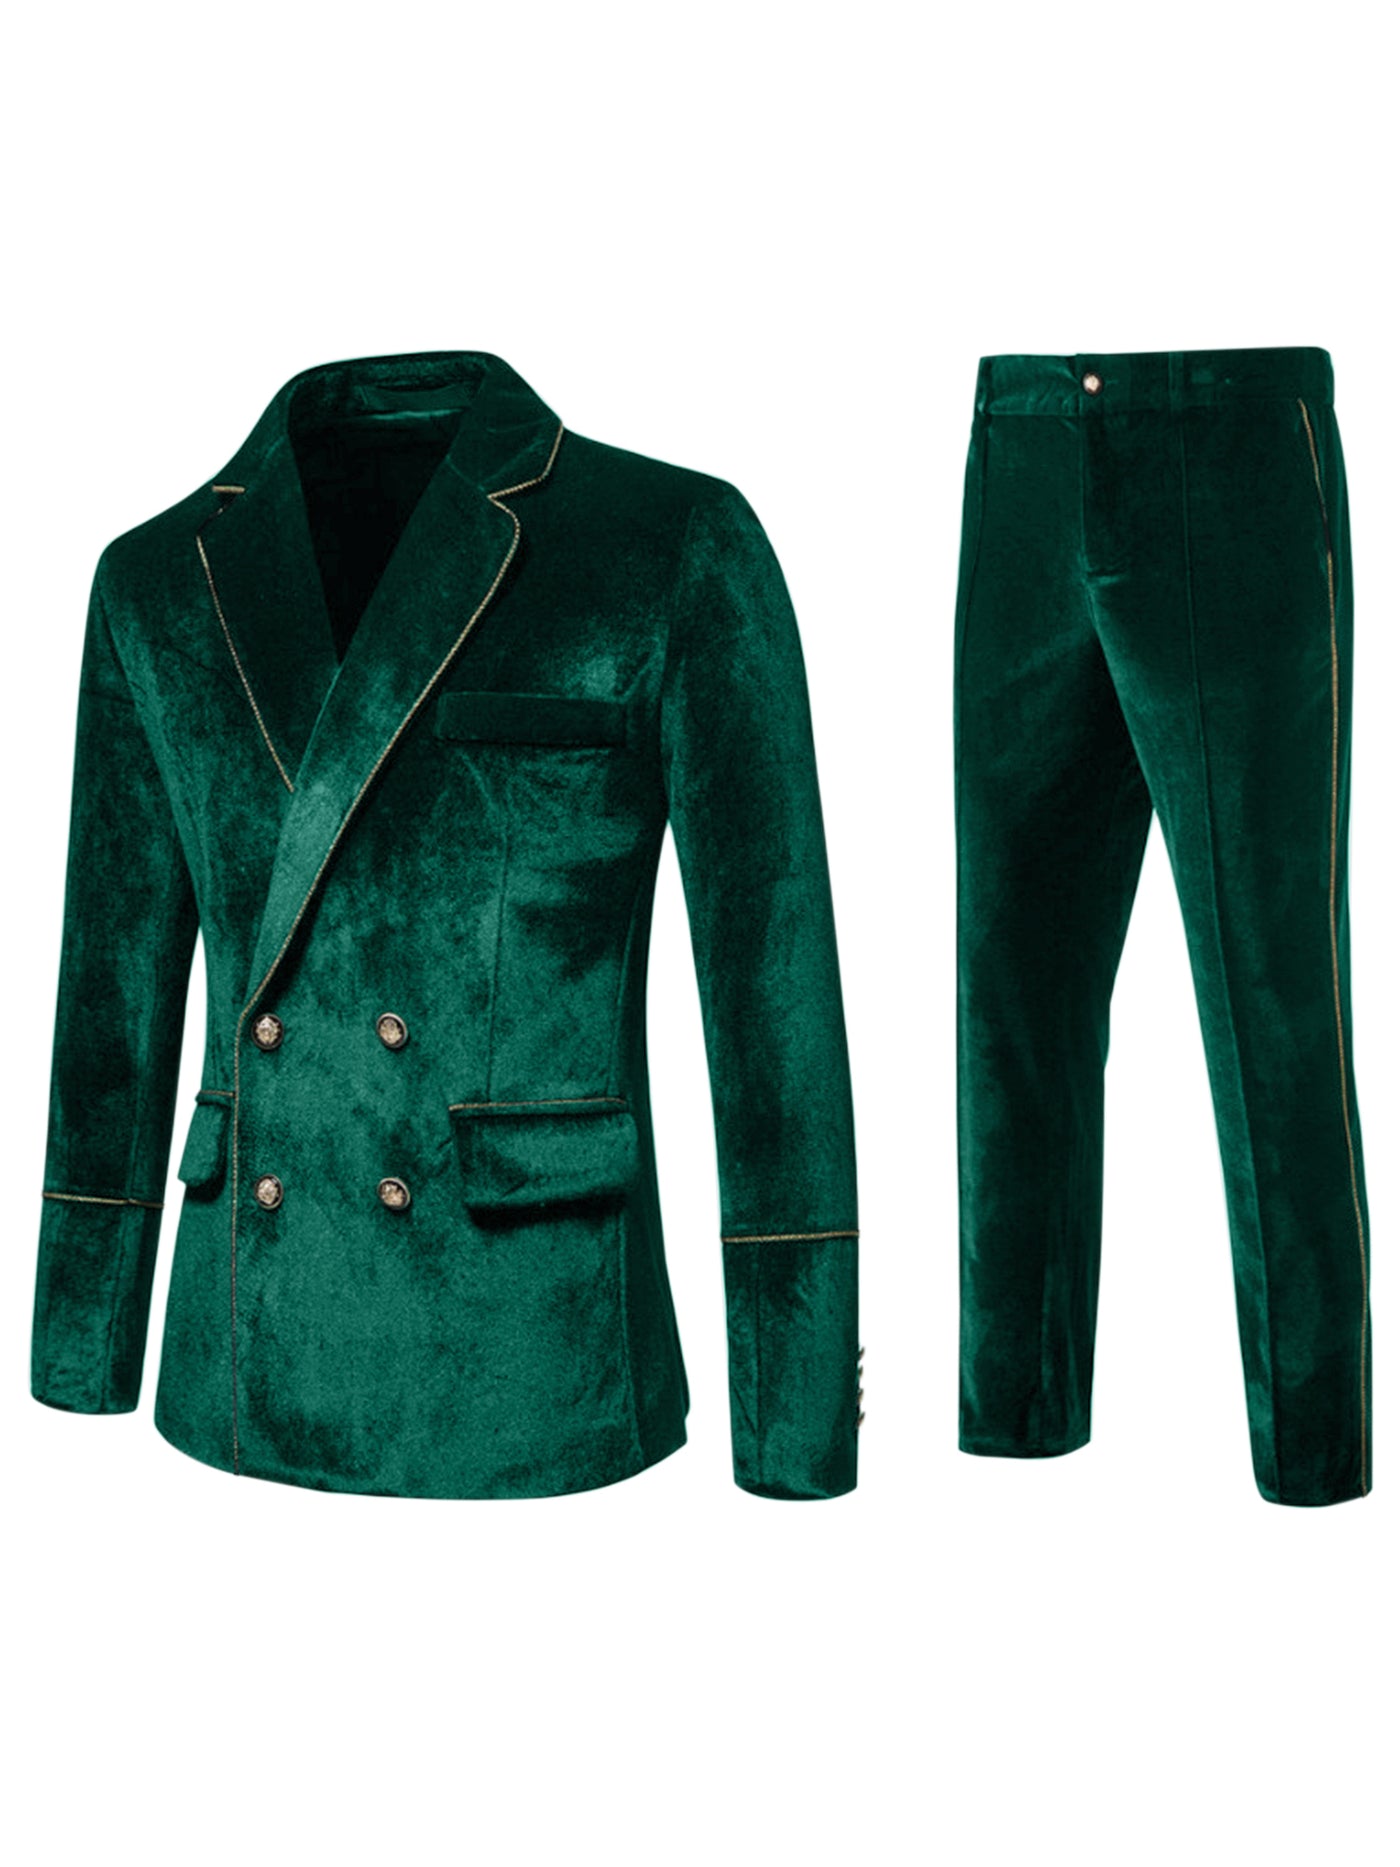 Bublédon Velvet Blazer for Men's 2 Pieces Suits Set Double Breasted Sports Coats and Dress Pants